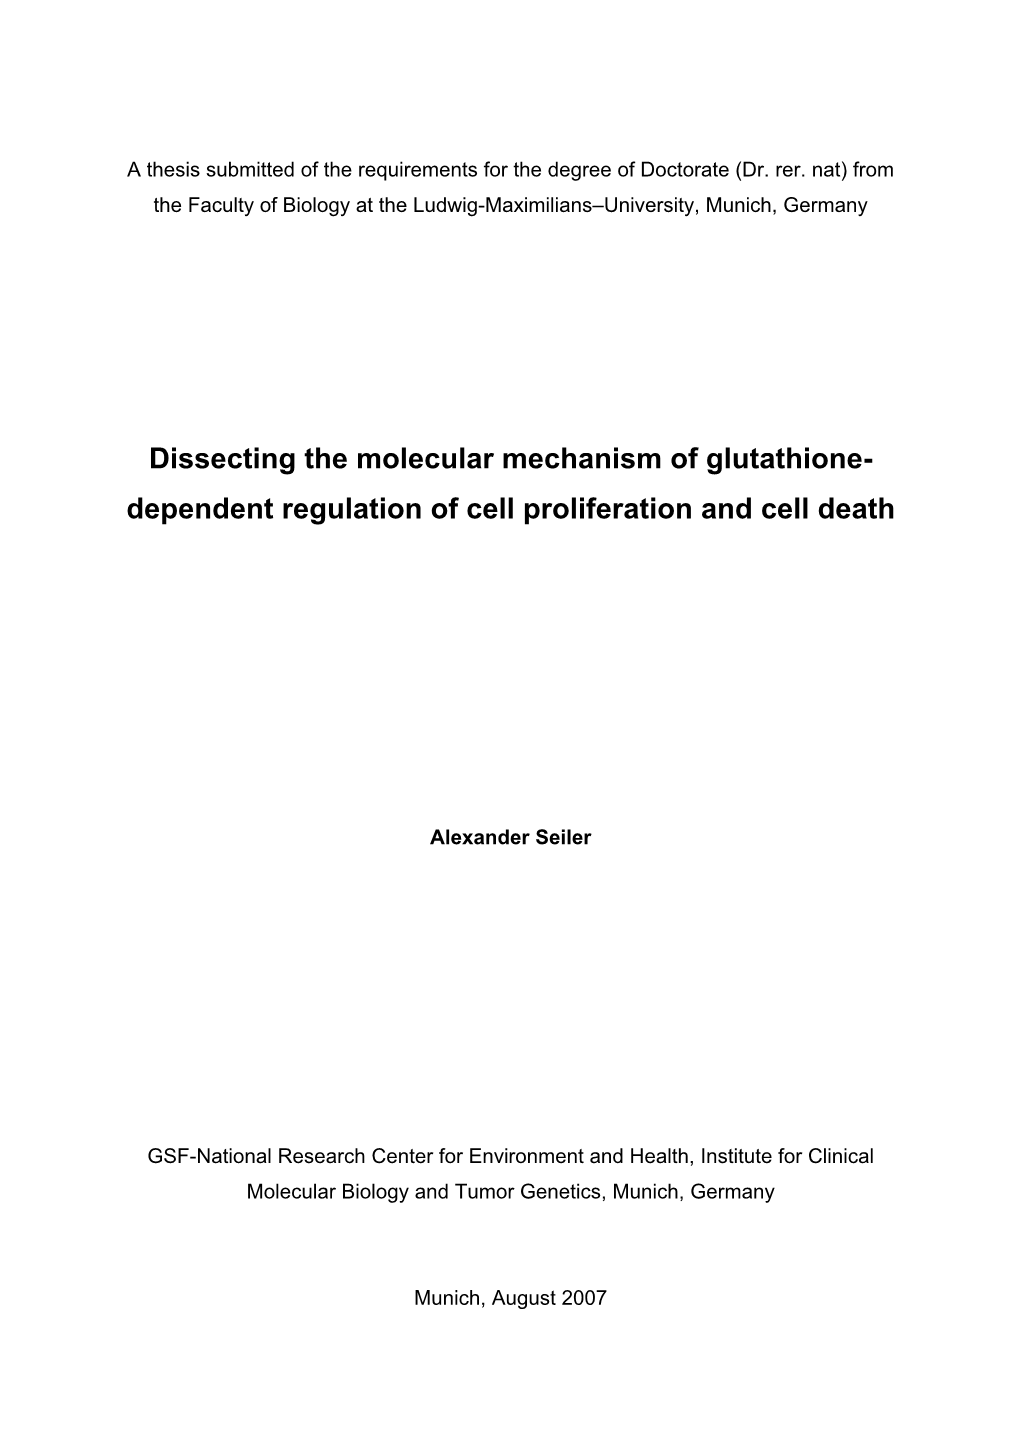 Dissecting the Molecular Mechanism of Glutathione-Dependent Regulation